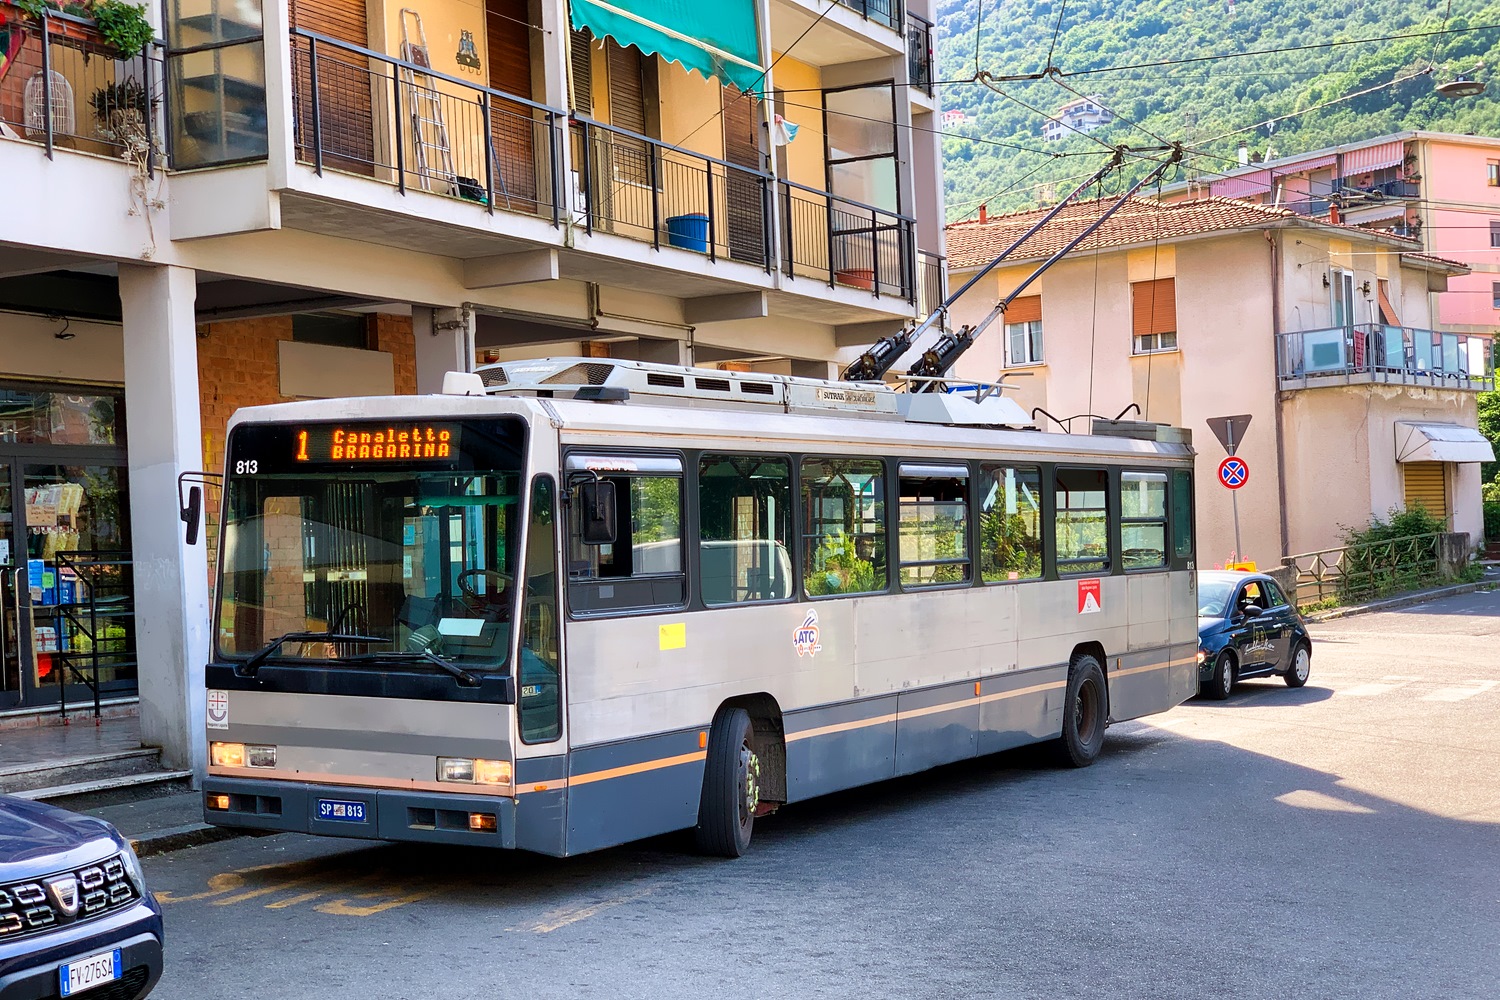 La Spezia, Bredabus 4001.12 № 813